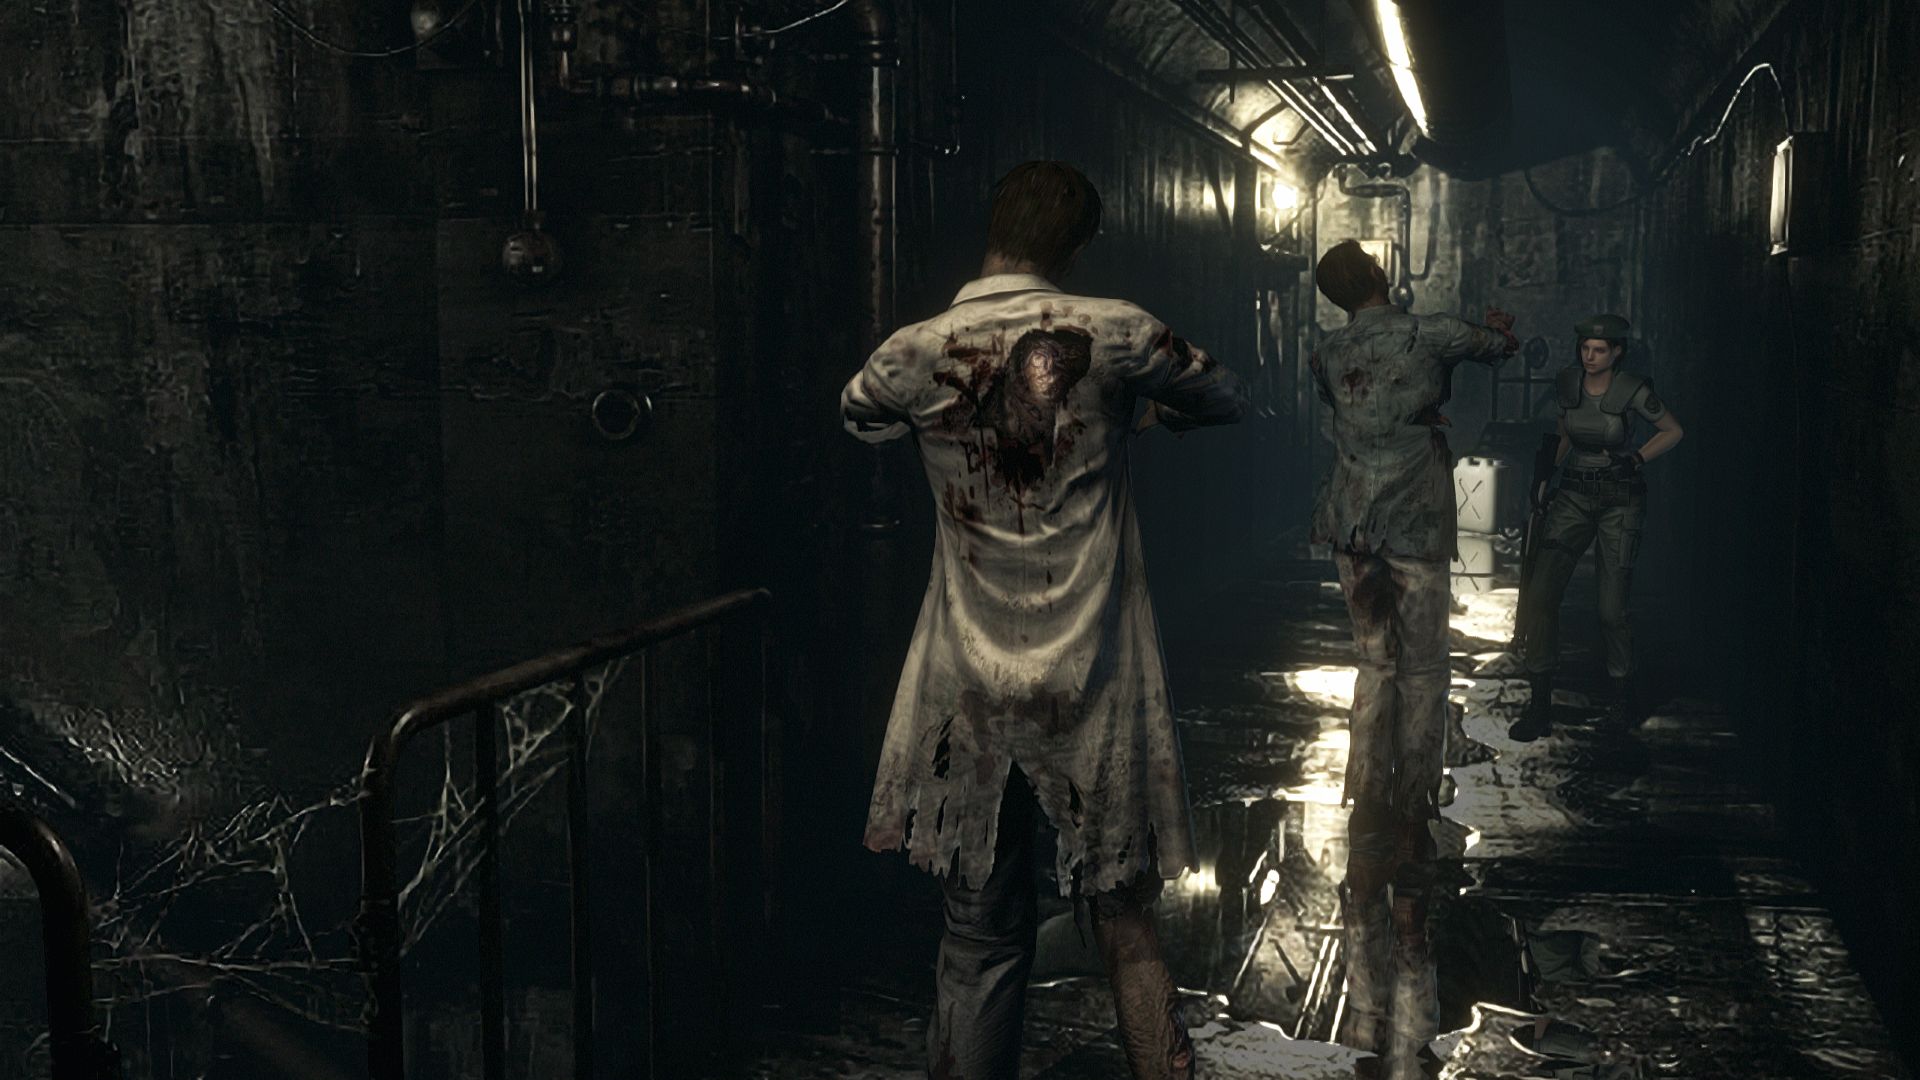 Capcom: Resident Evil HD Remaster Official Site